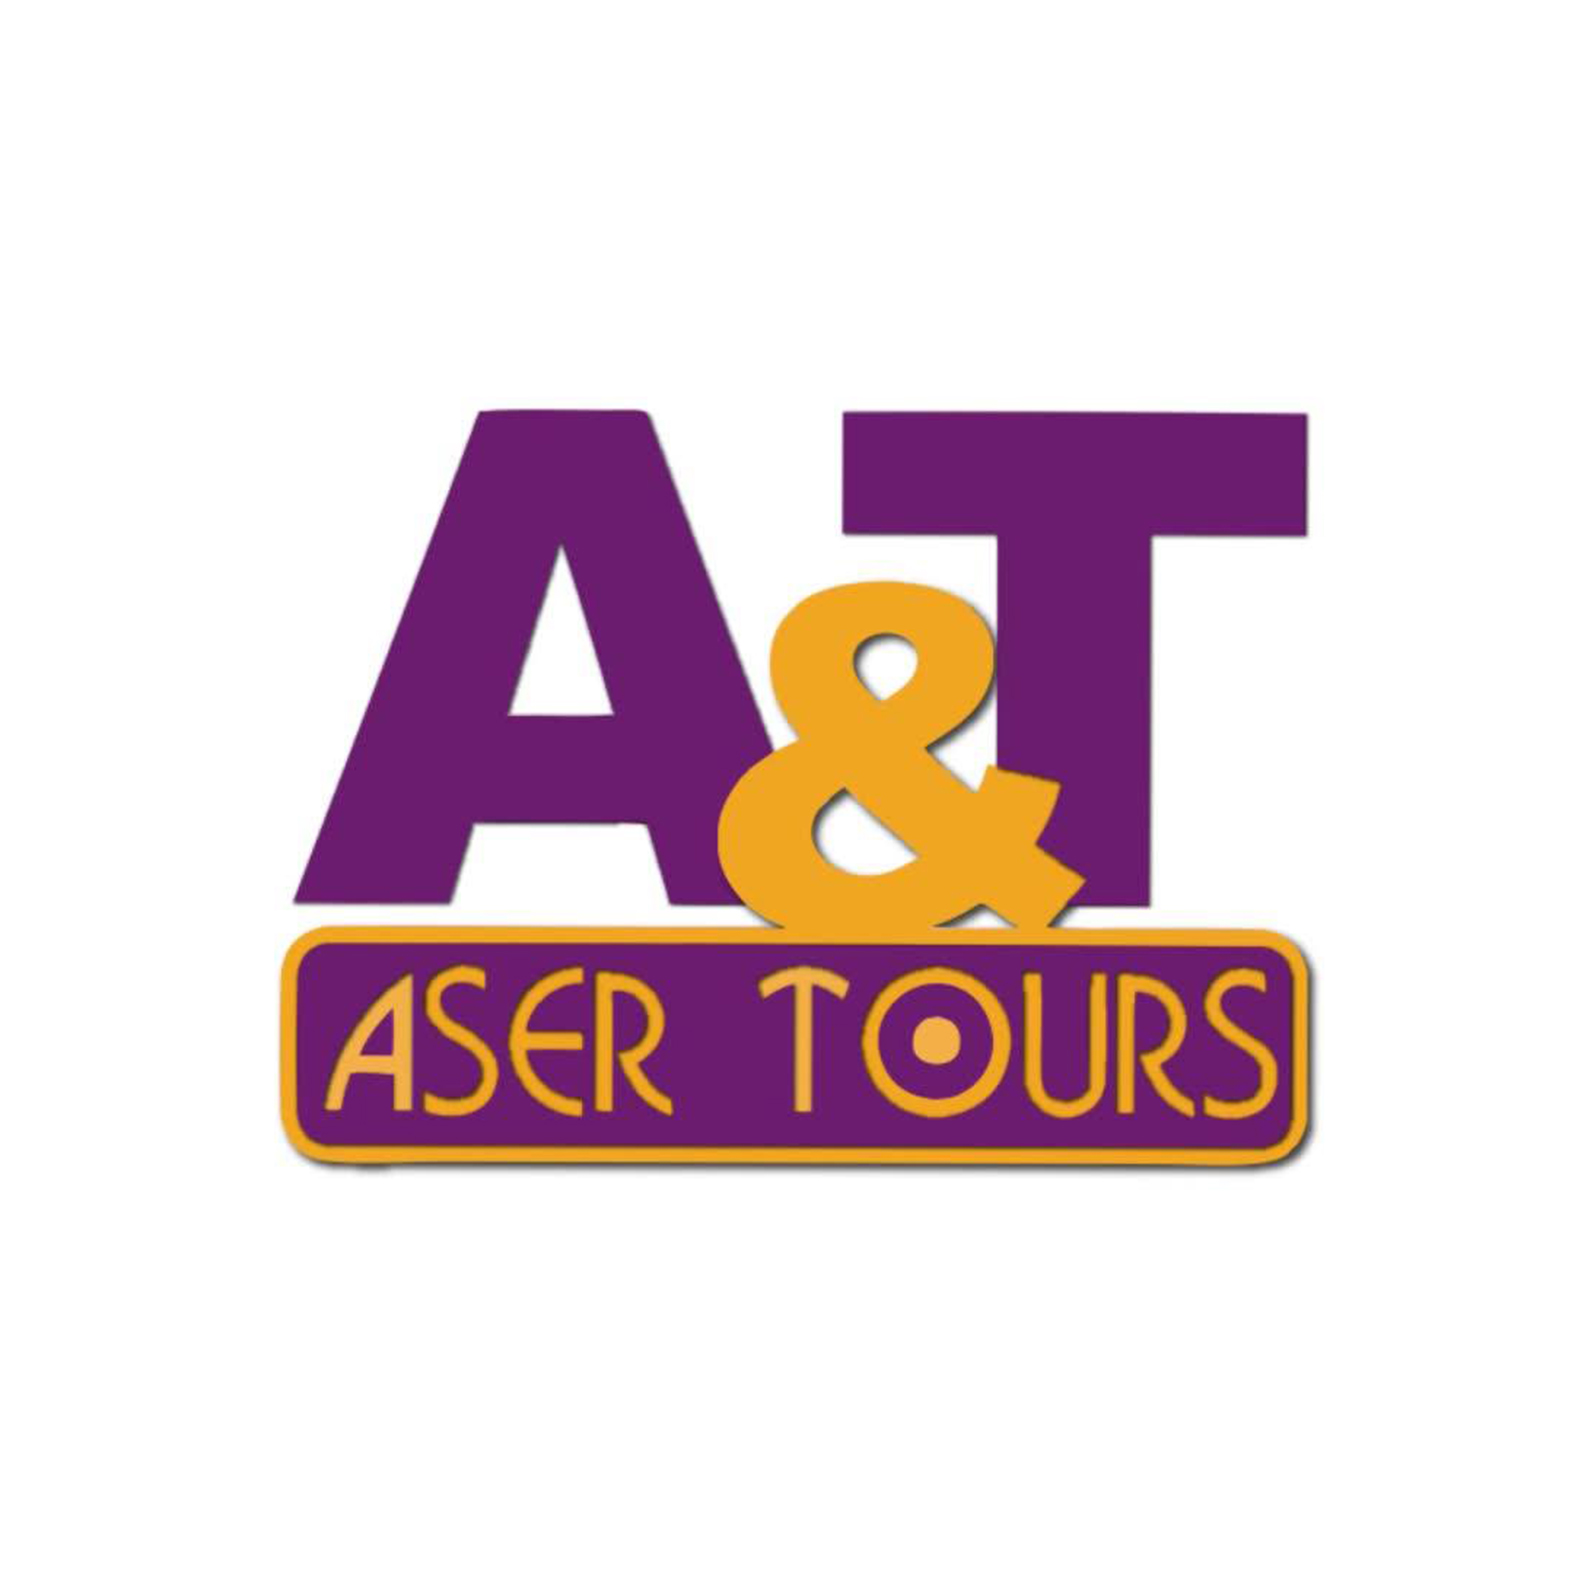 Aser Tours